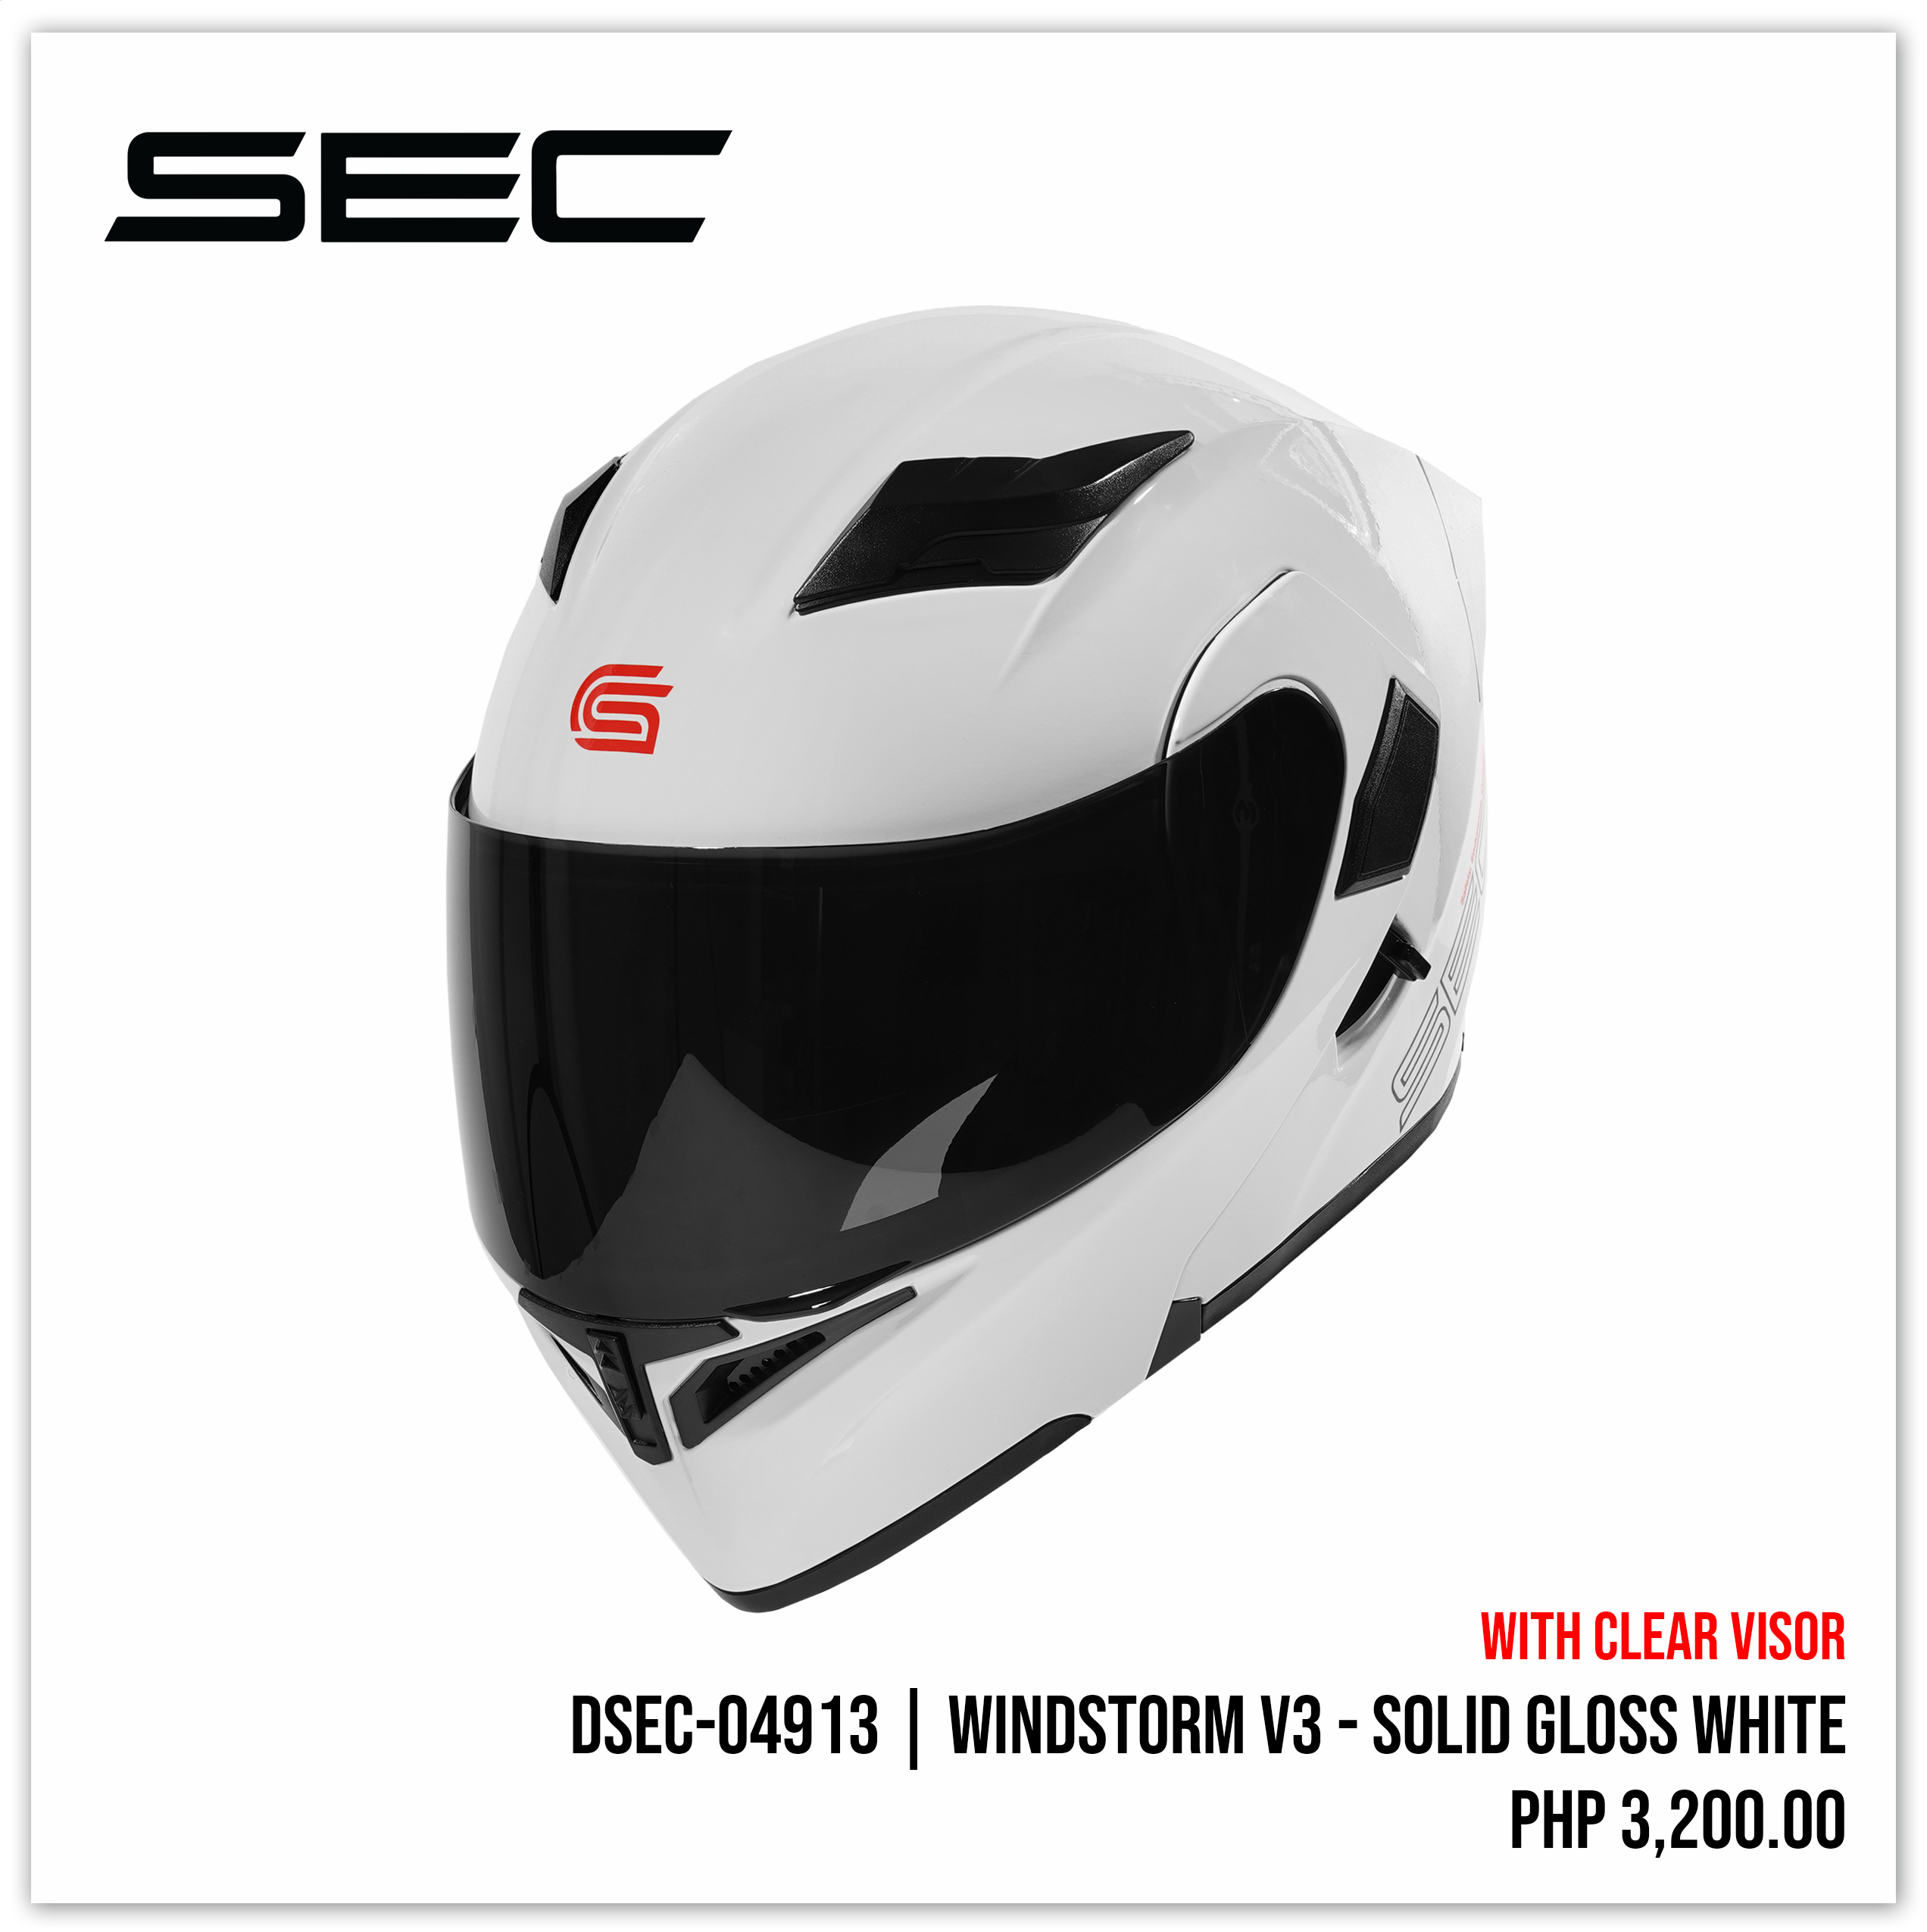 Windstorm V3 - Solid Gloss White